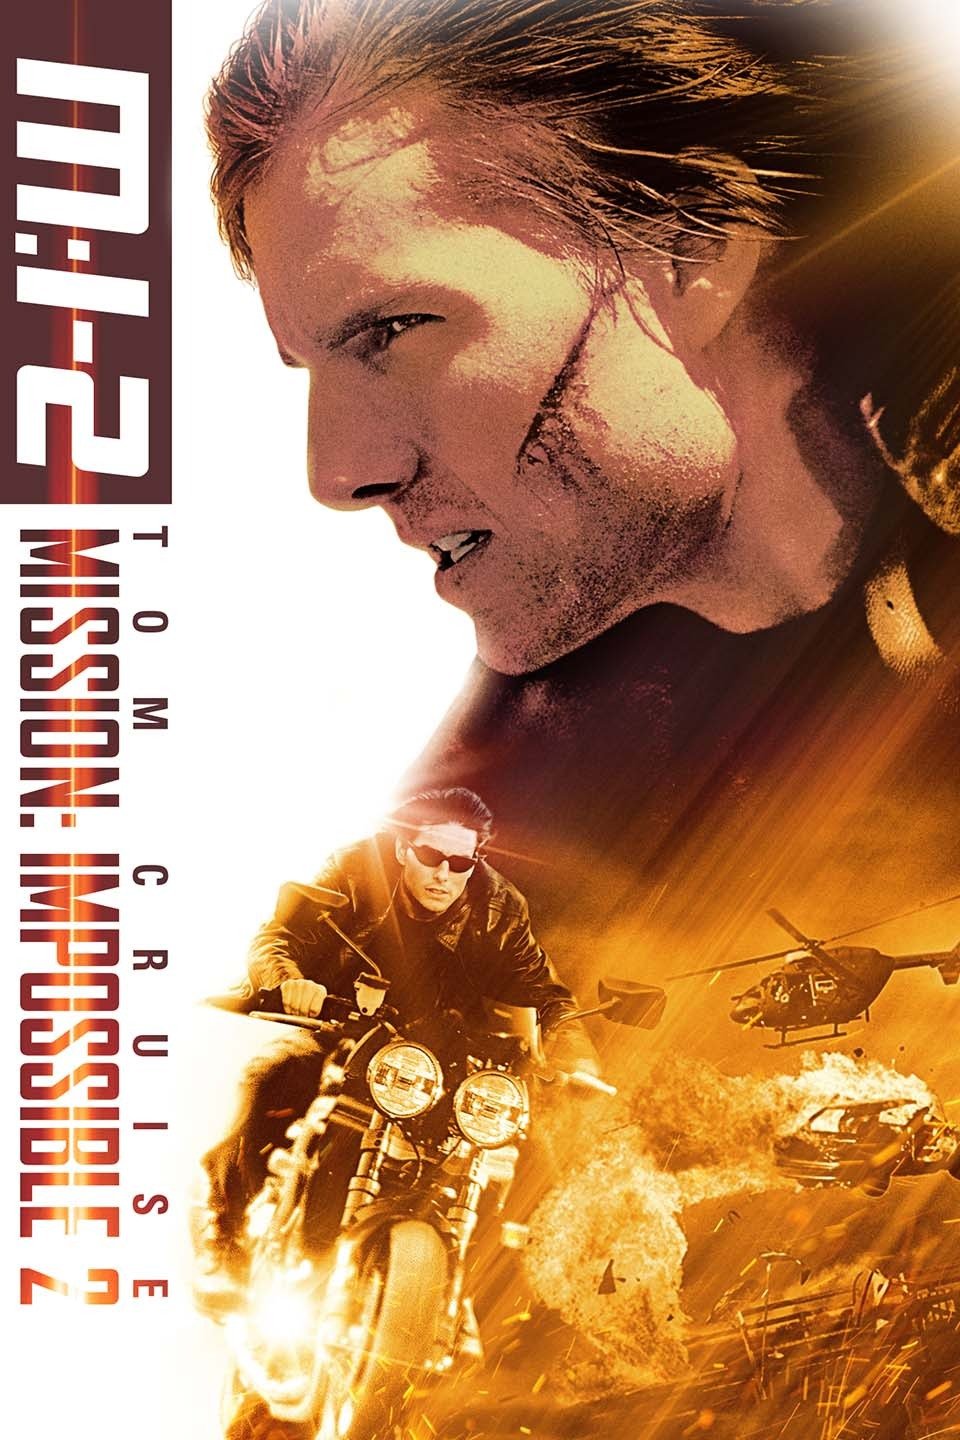 [MINI Super-HQ] Mission: Impossible II (2000) ผ่าปฏิบัติการสะท้านโลก 2 [1080p] [พากย์ไทย 5.1 + อังกฤษ 5.1] [x264.AC3] [บรรยายไทย + อังกฤษ] [เสียงไทย + ซับไทย] [ONE2UP]